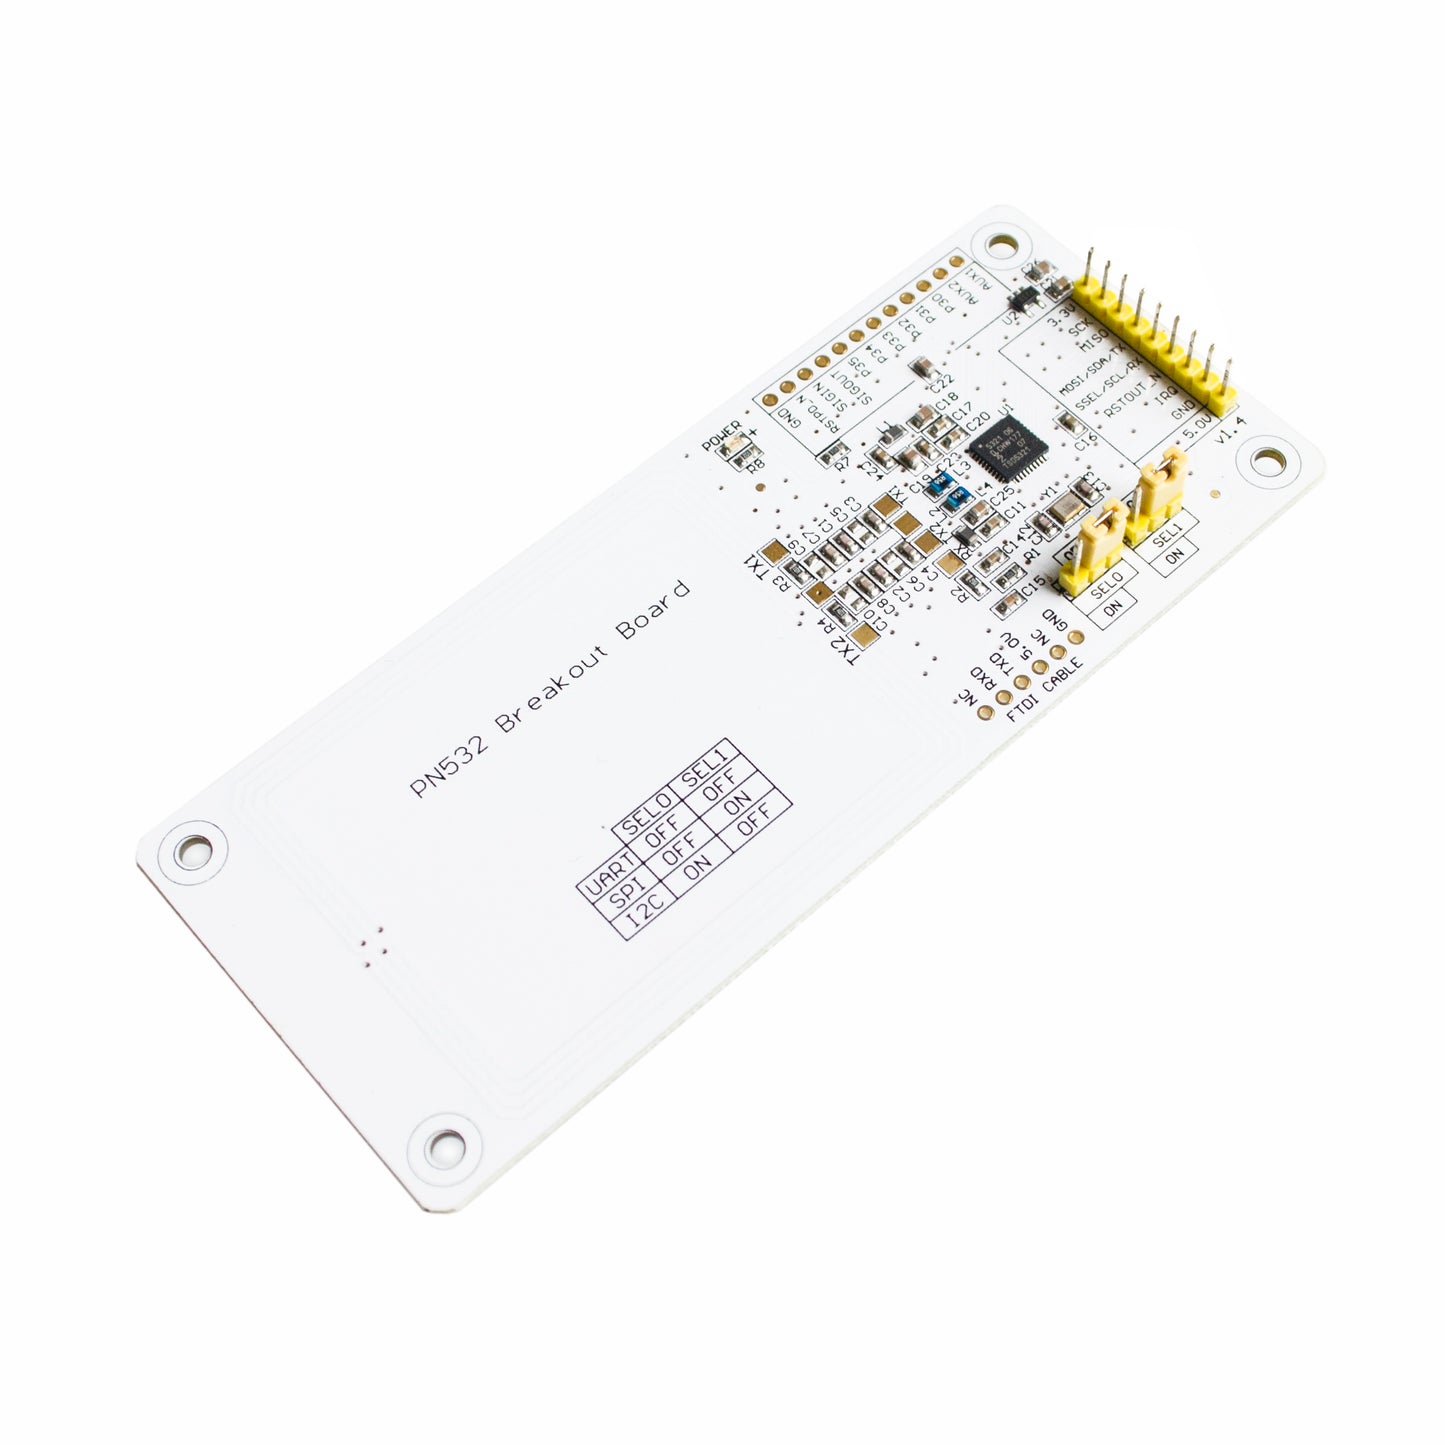 NFC RFID PN532 controller breakout board